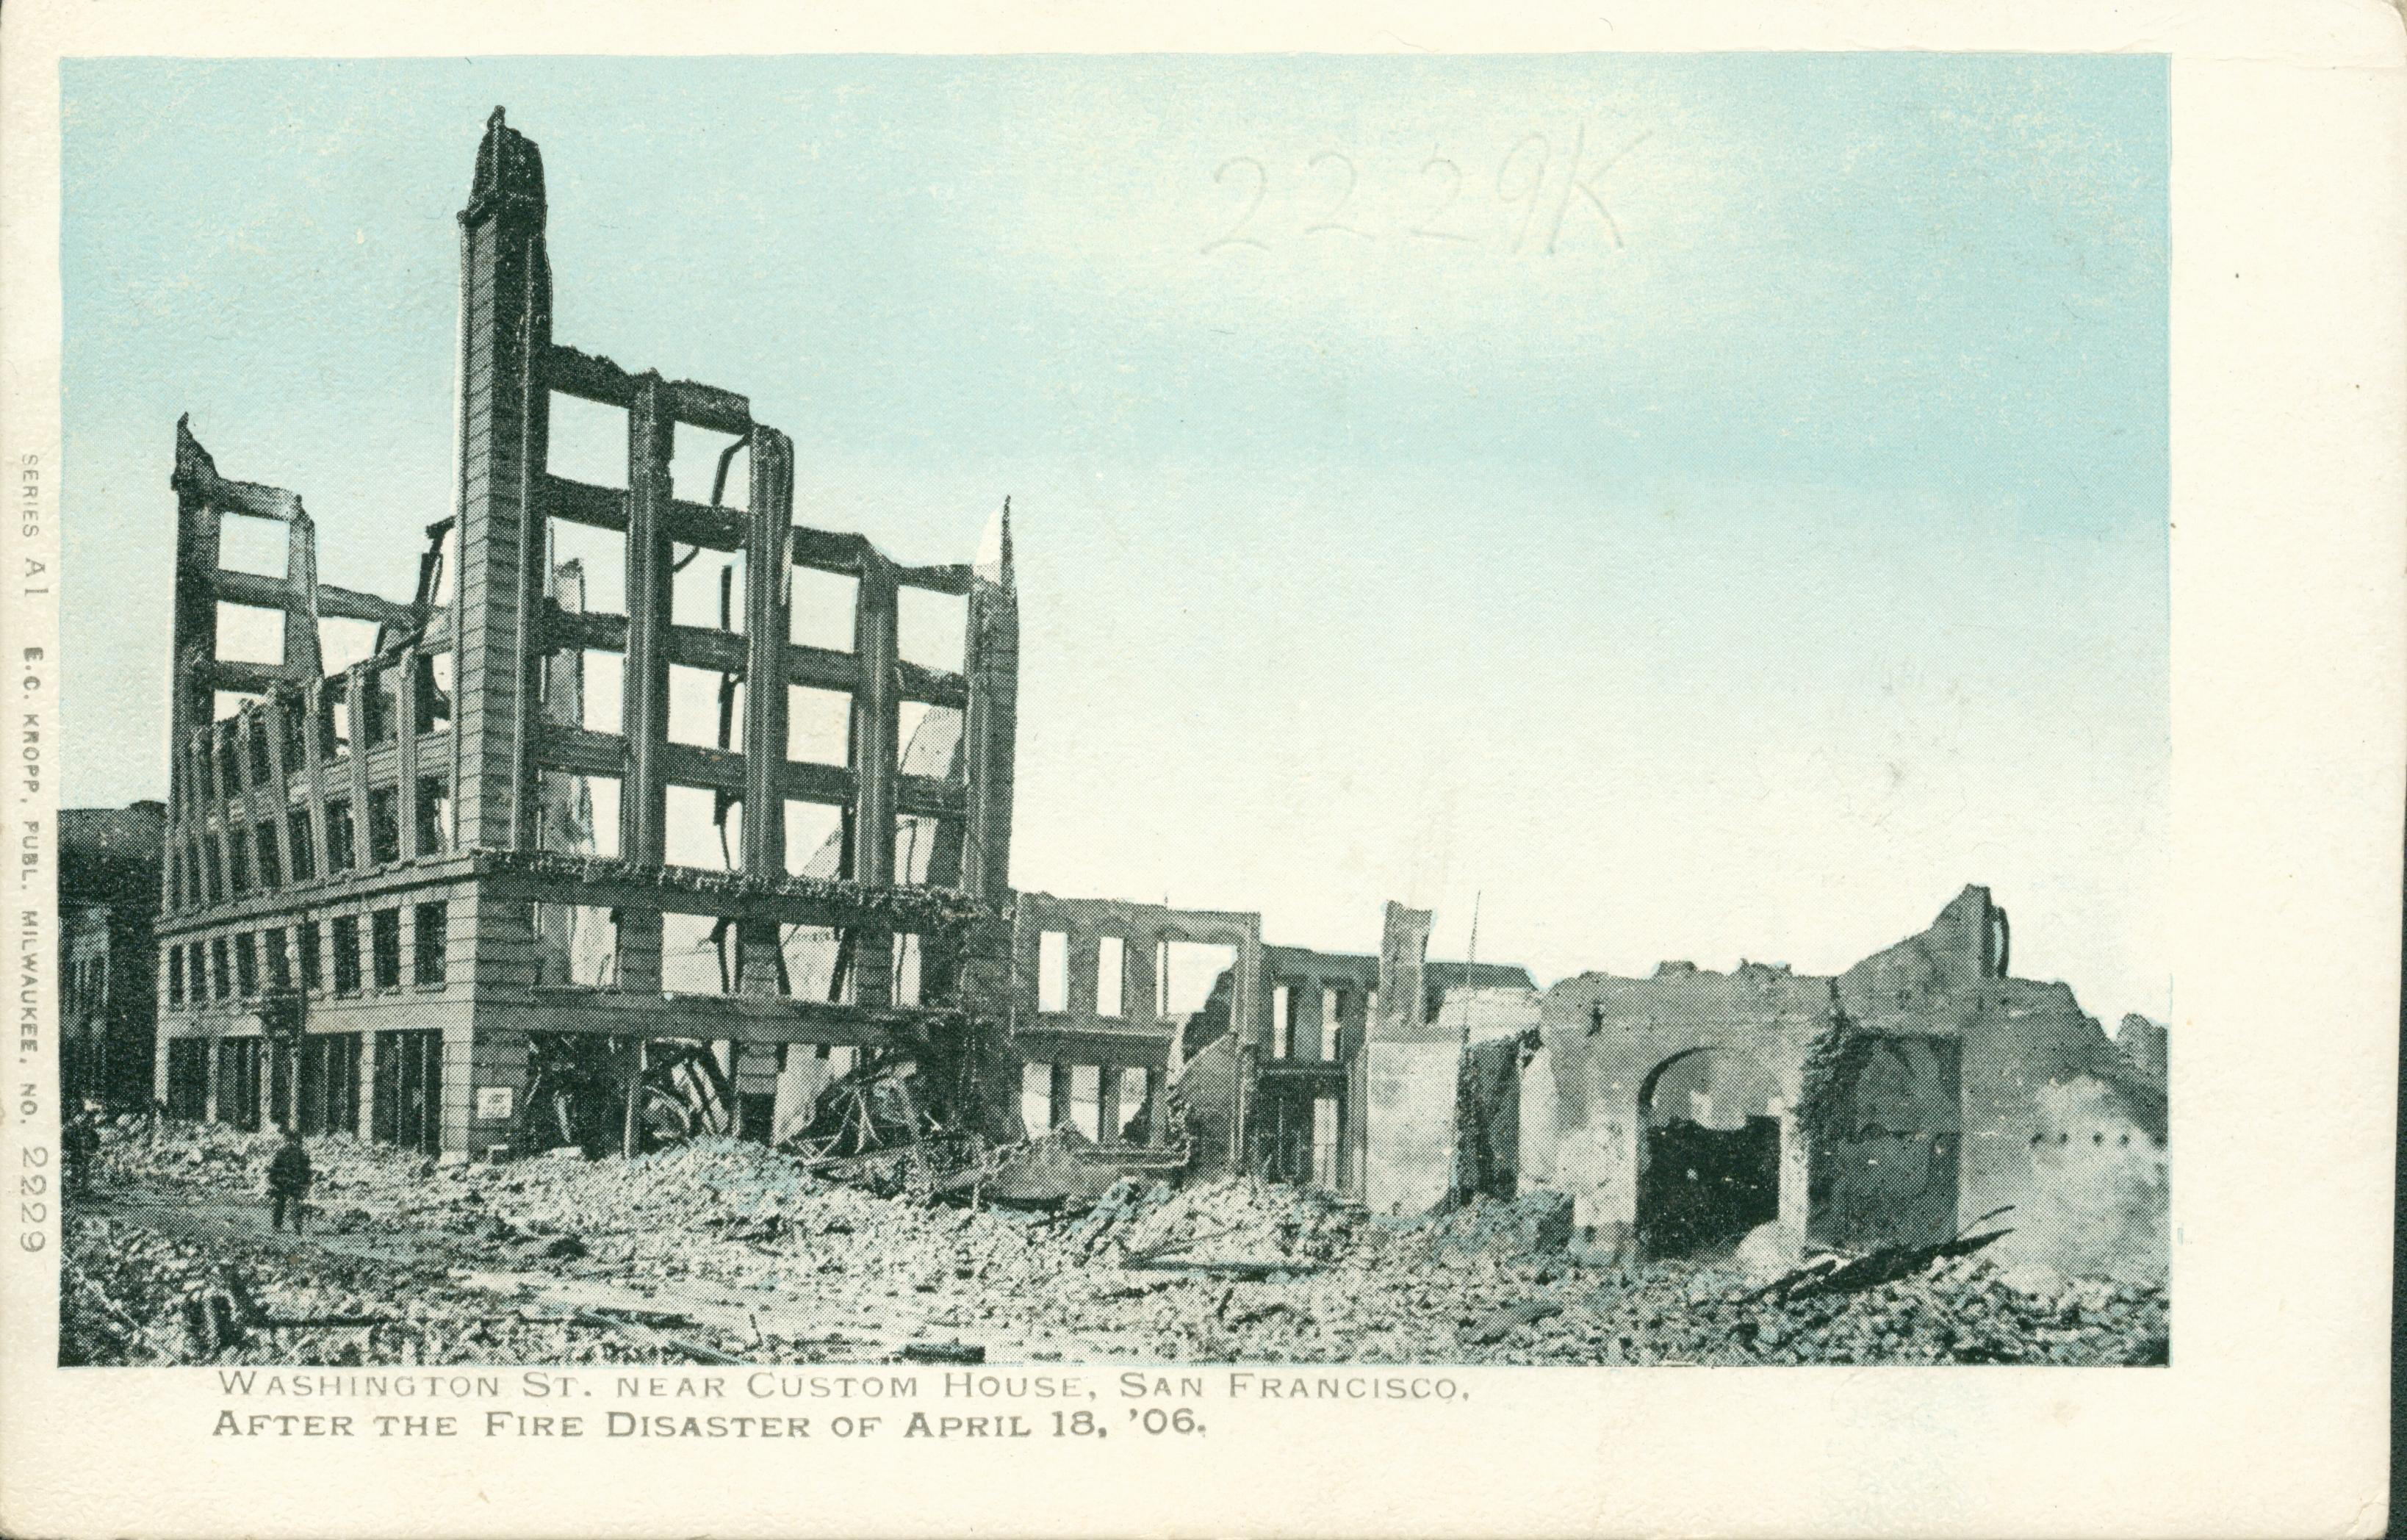 Shows rubble and collapsed buildings along Washington St. near Custom House, San Francisco, California.